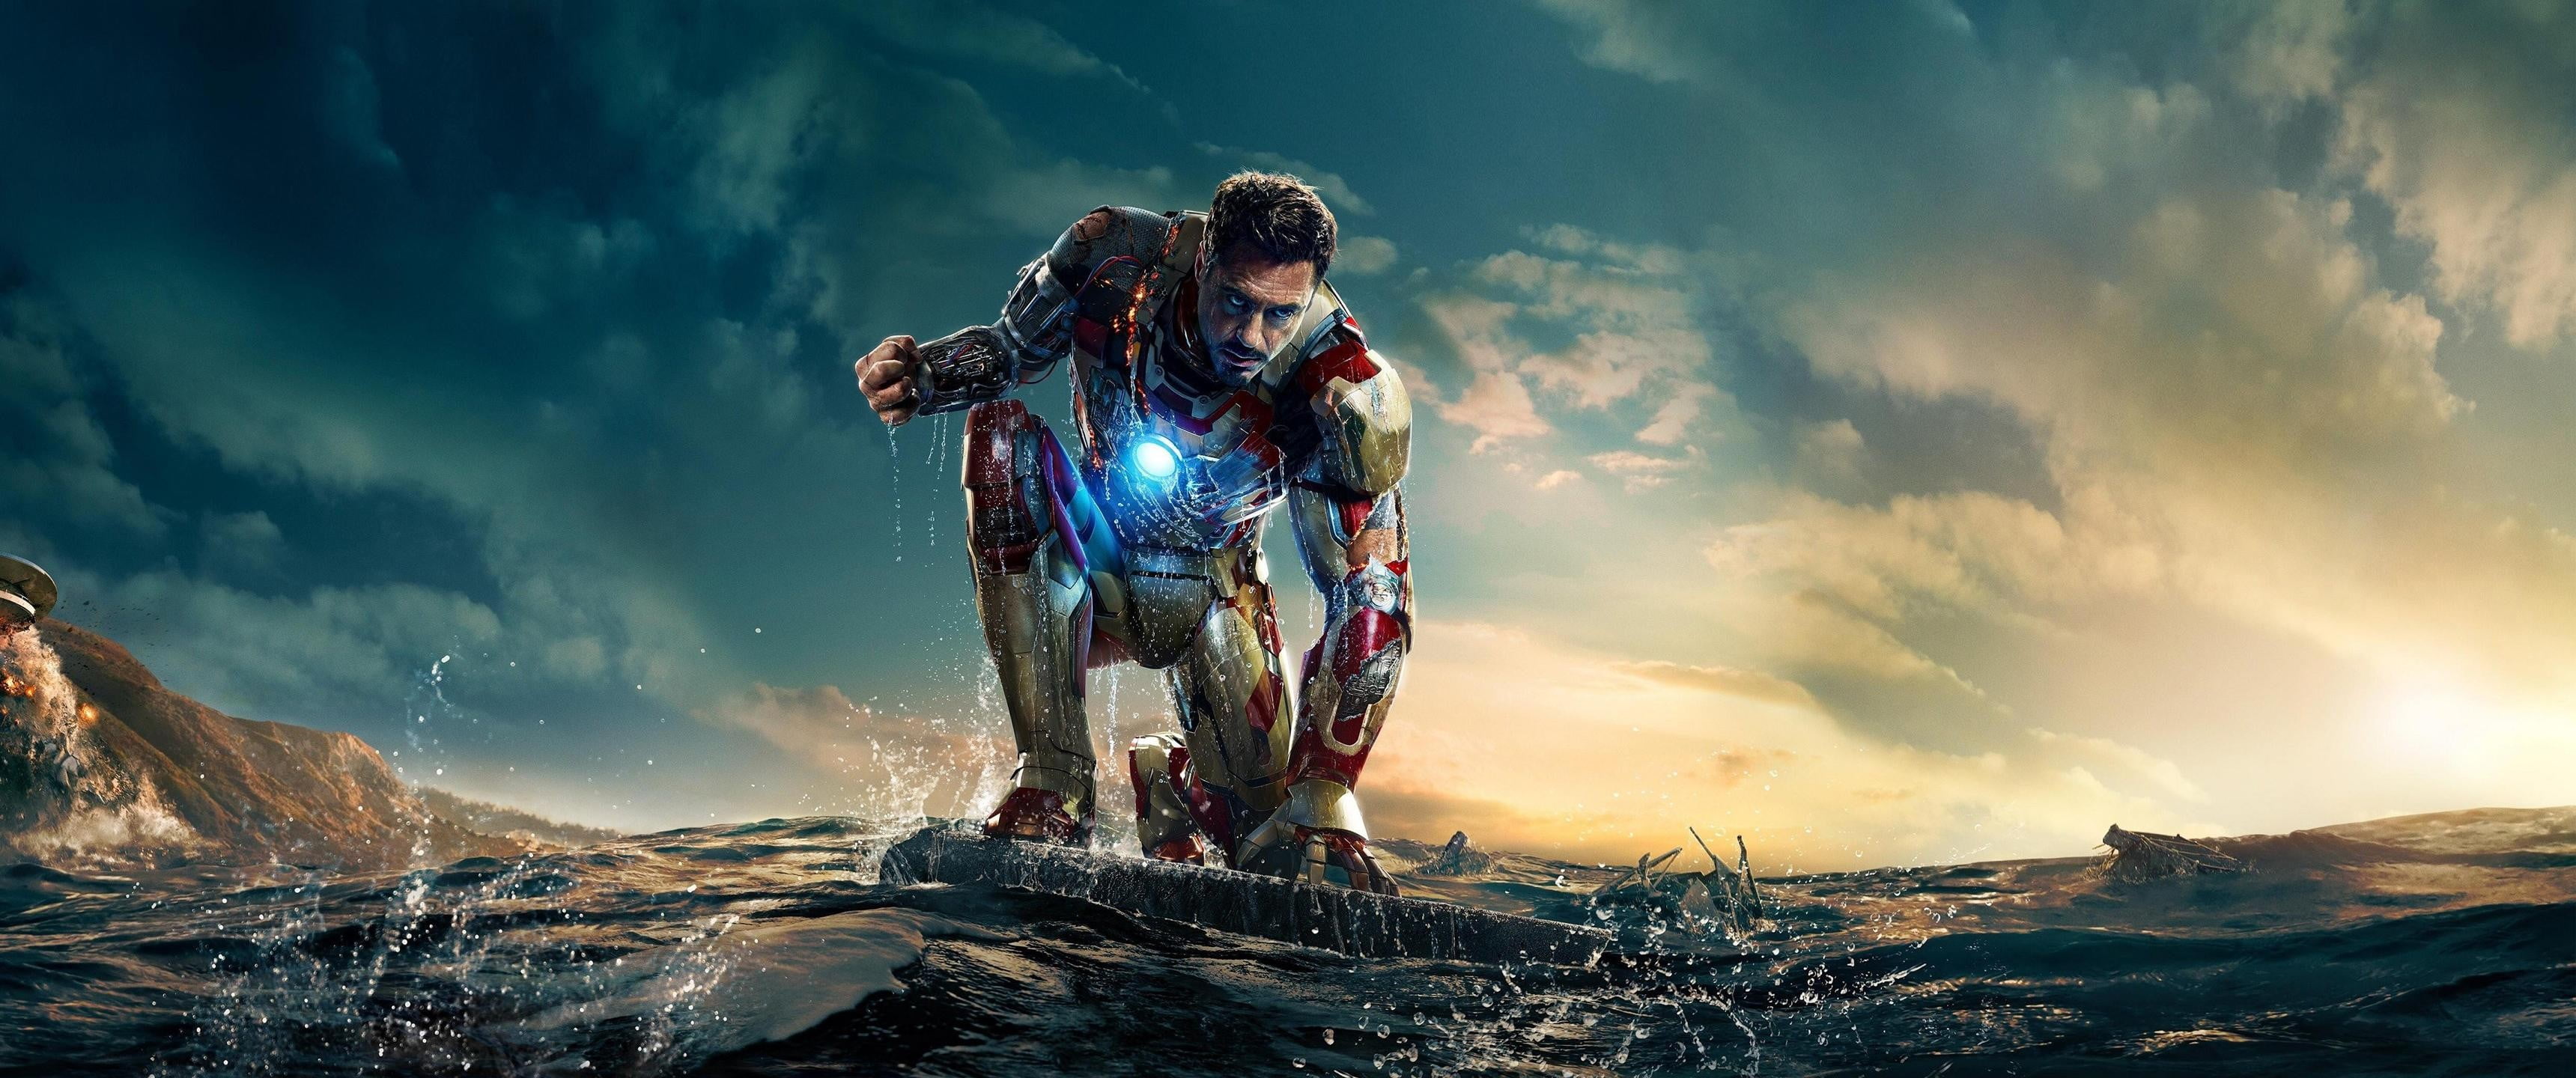 Iron-Man 3 graphic wallpaper, Iron Man, movies, Marvel Cinematic Universe